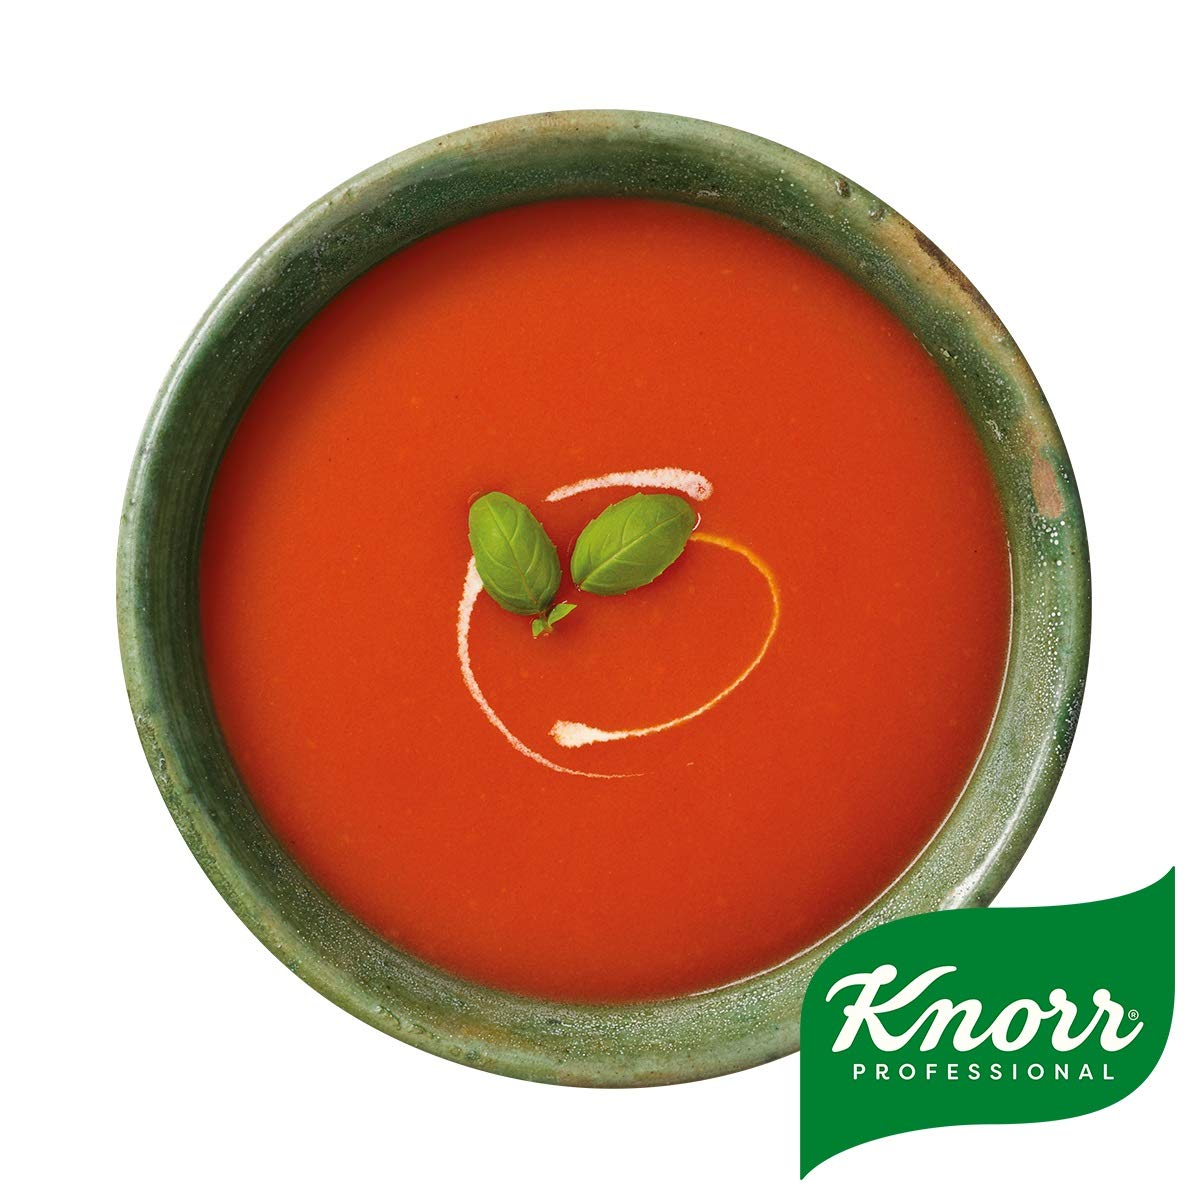 Sopa de Tomate Knorr (85g) - Knorr Tomato Soup (85g)